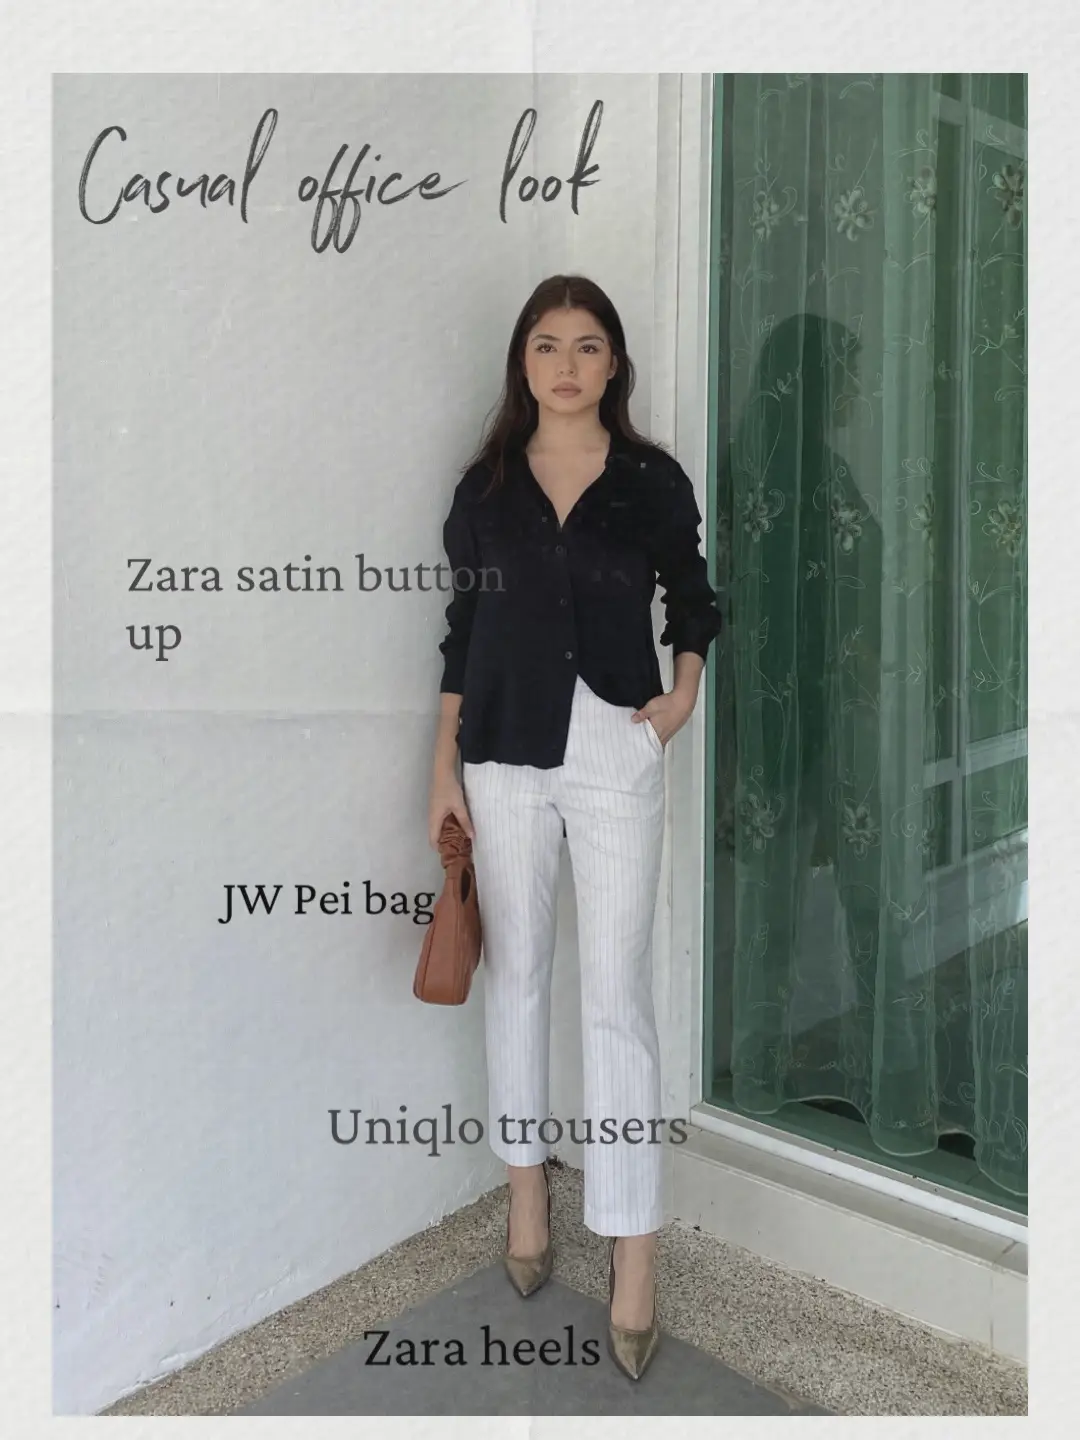 ZARA International 🌟 on Instagram: “Workwear 😍 ✨ Which outfit